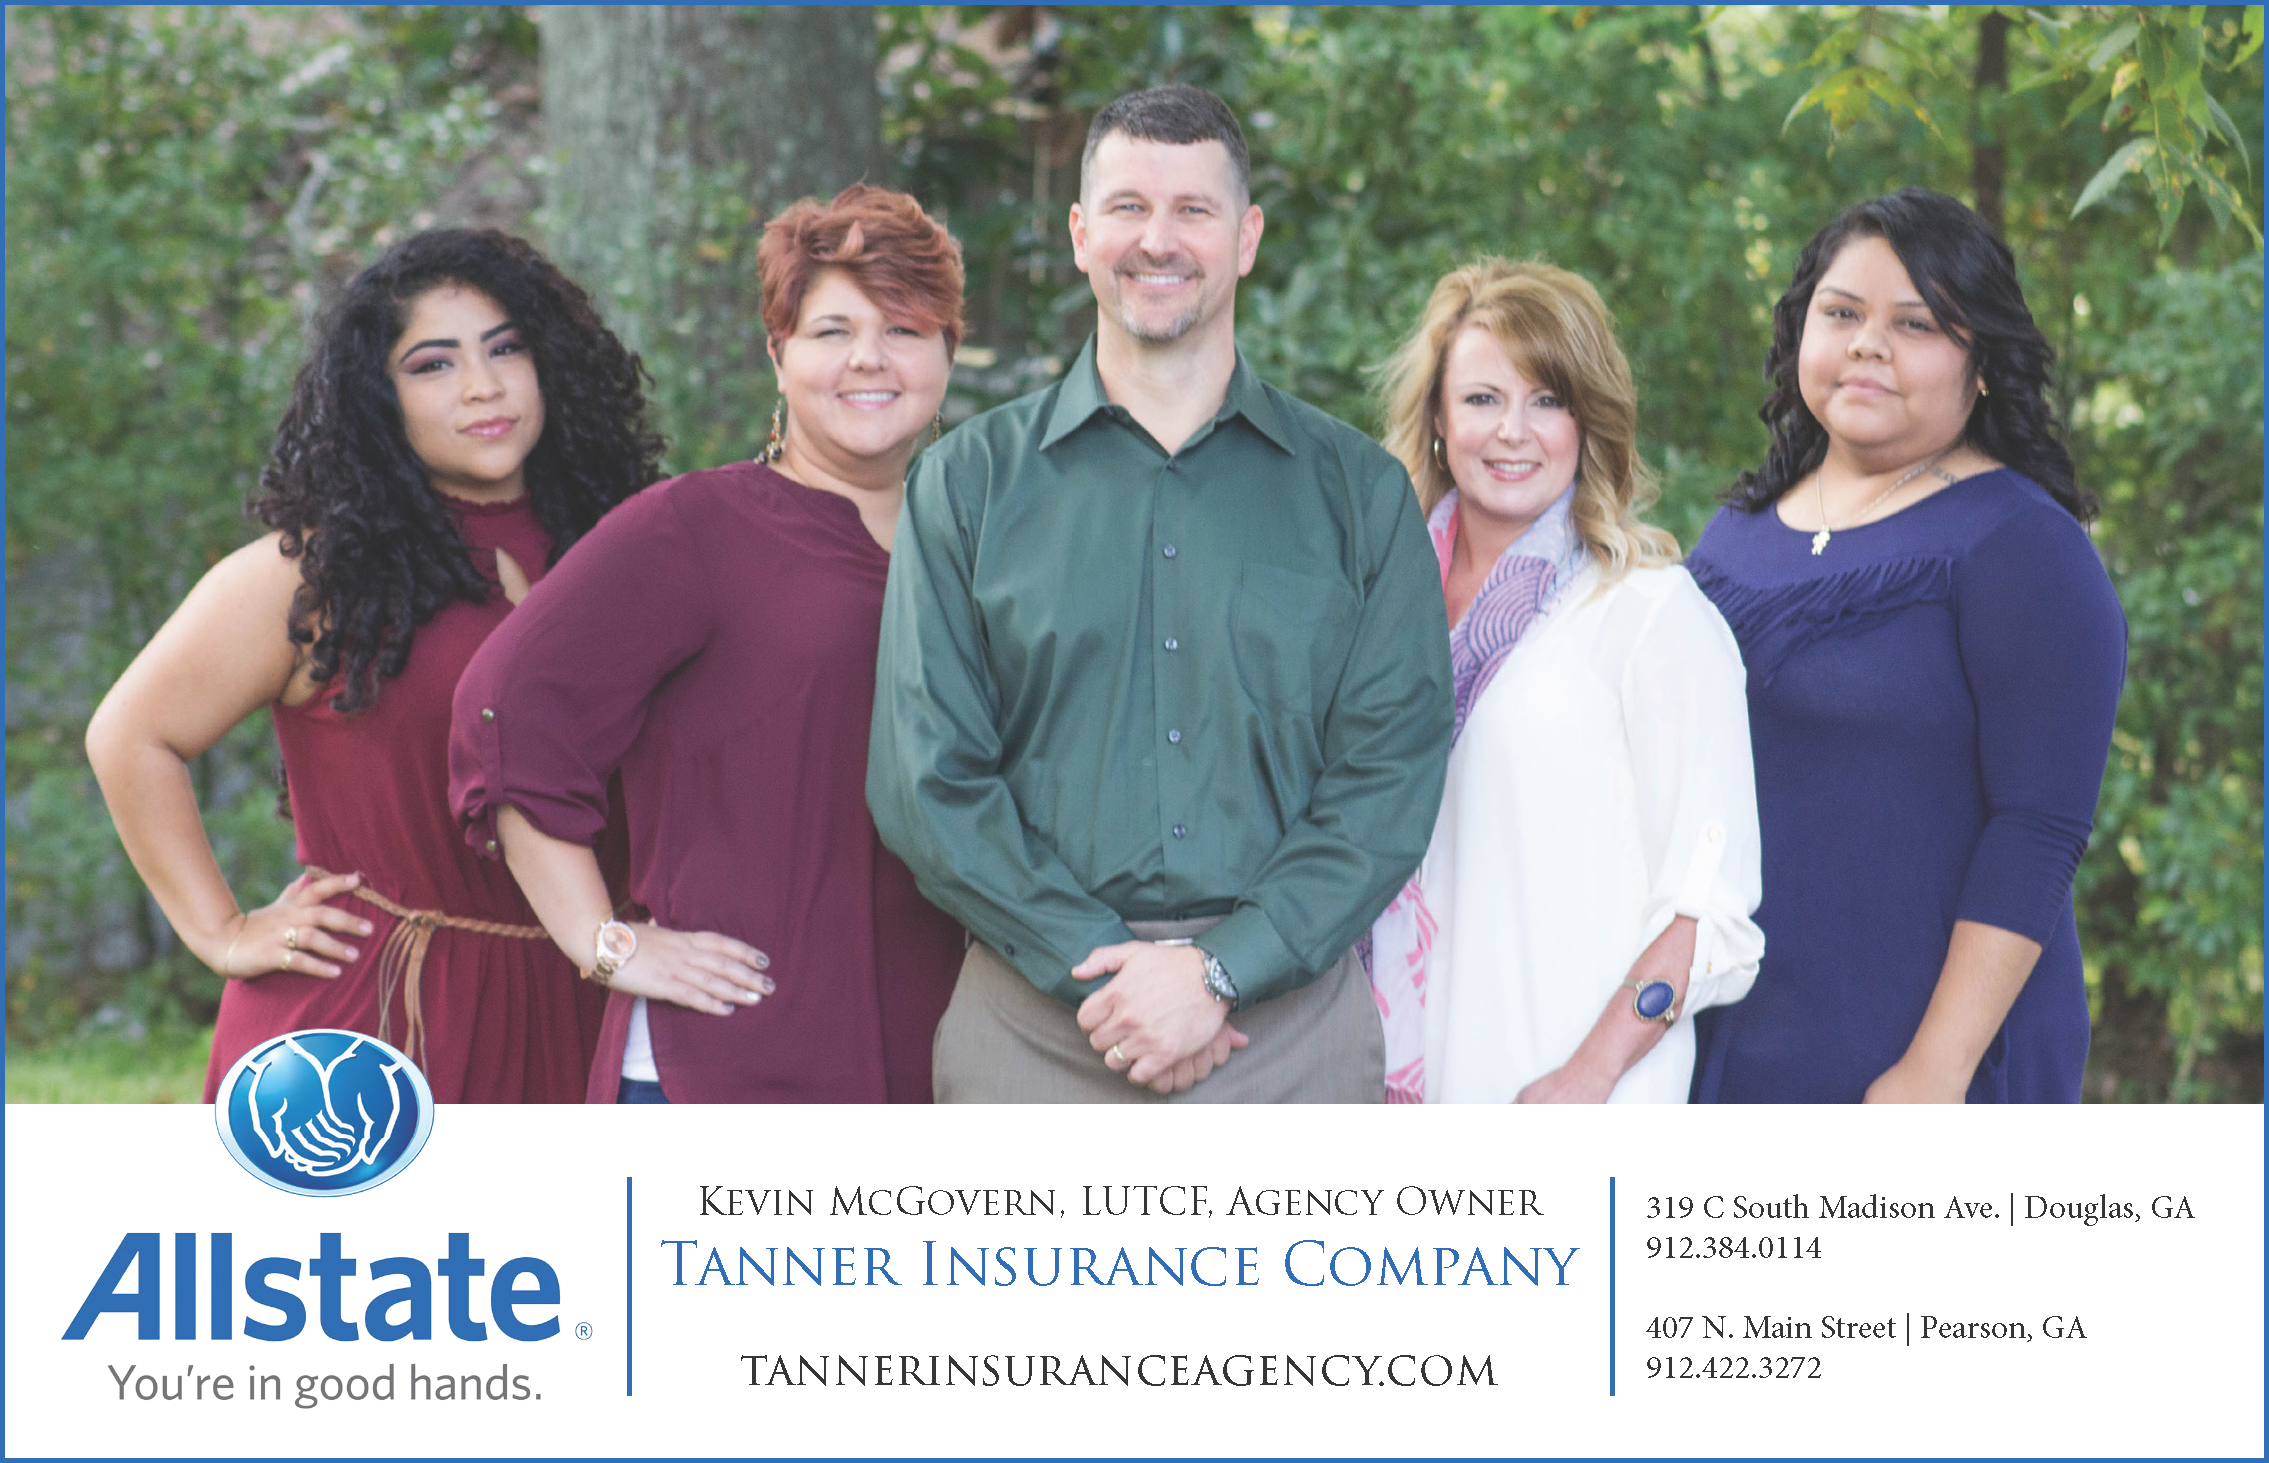 Tanner Insurance Agency, Inc. Photo